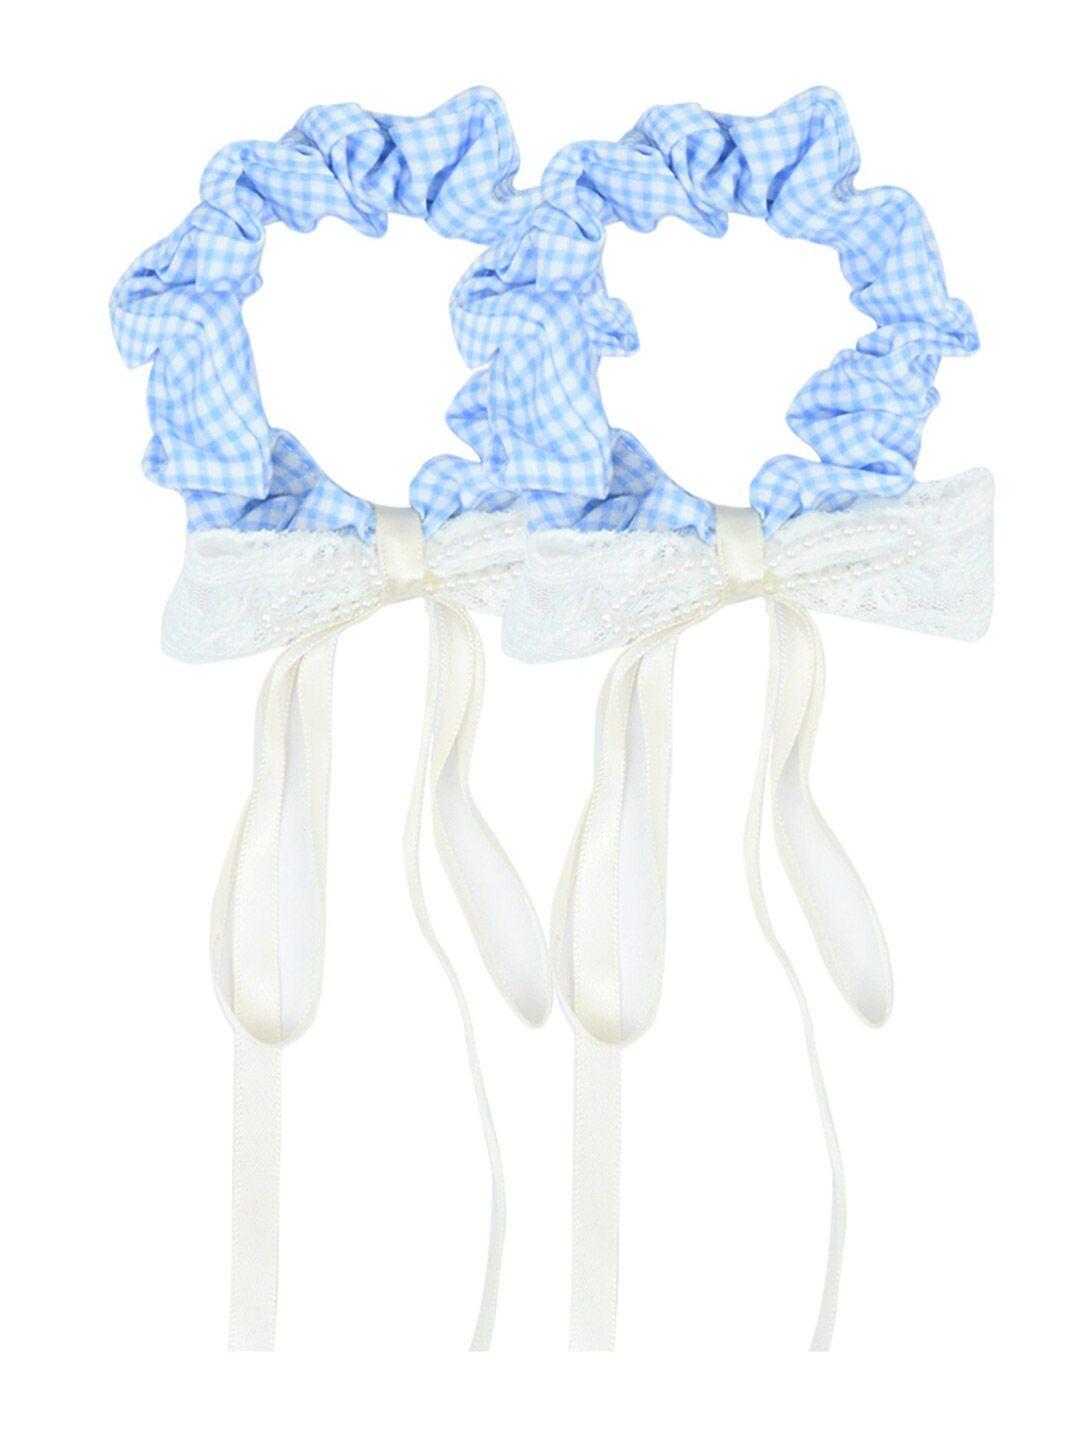 funkrafts-girls-blue-&-white-set-of-2-hair-accessory-set